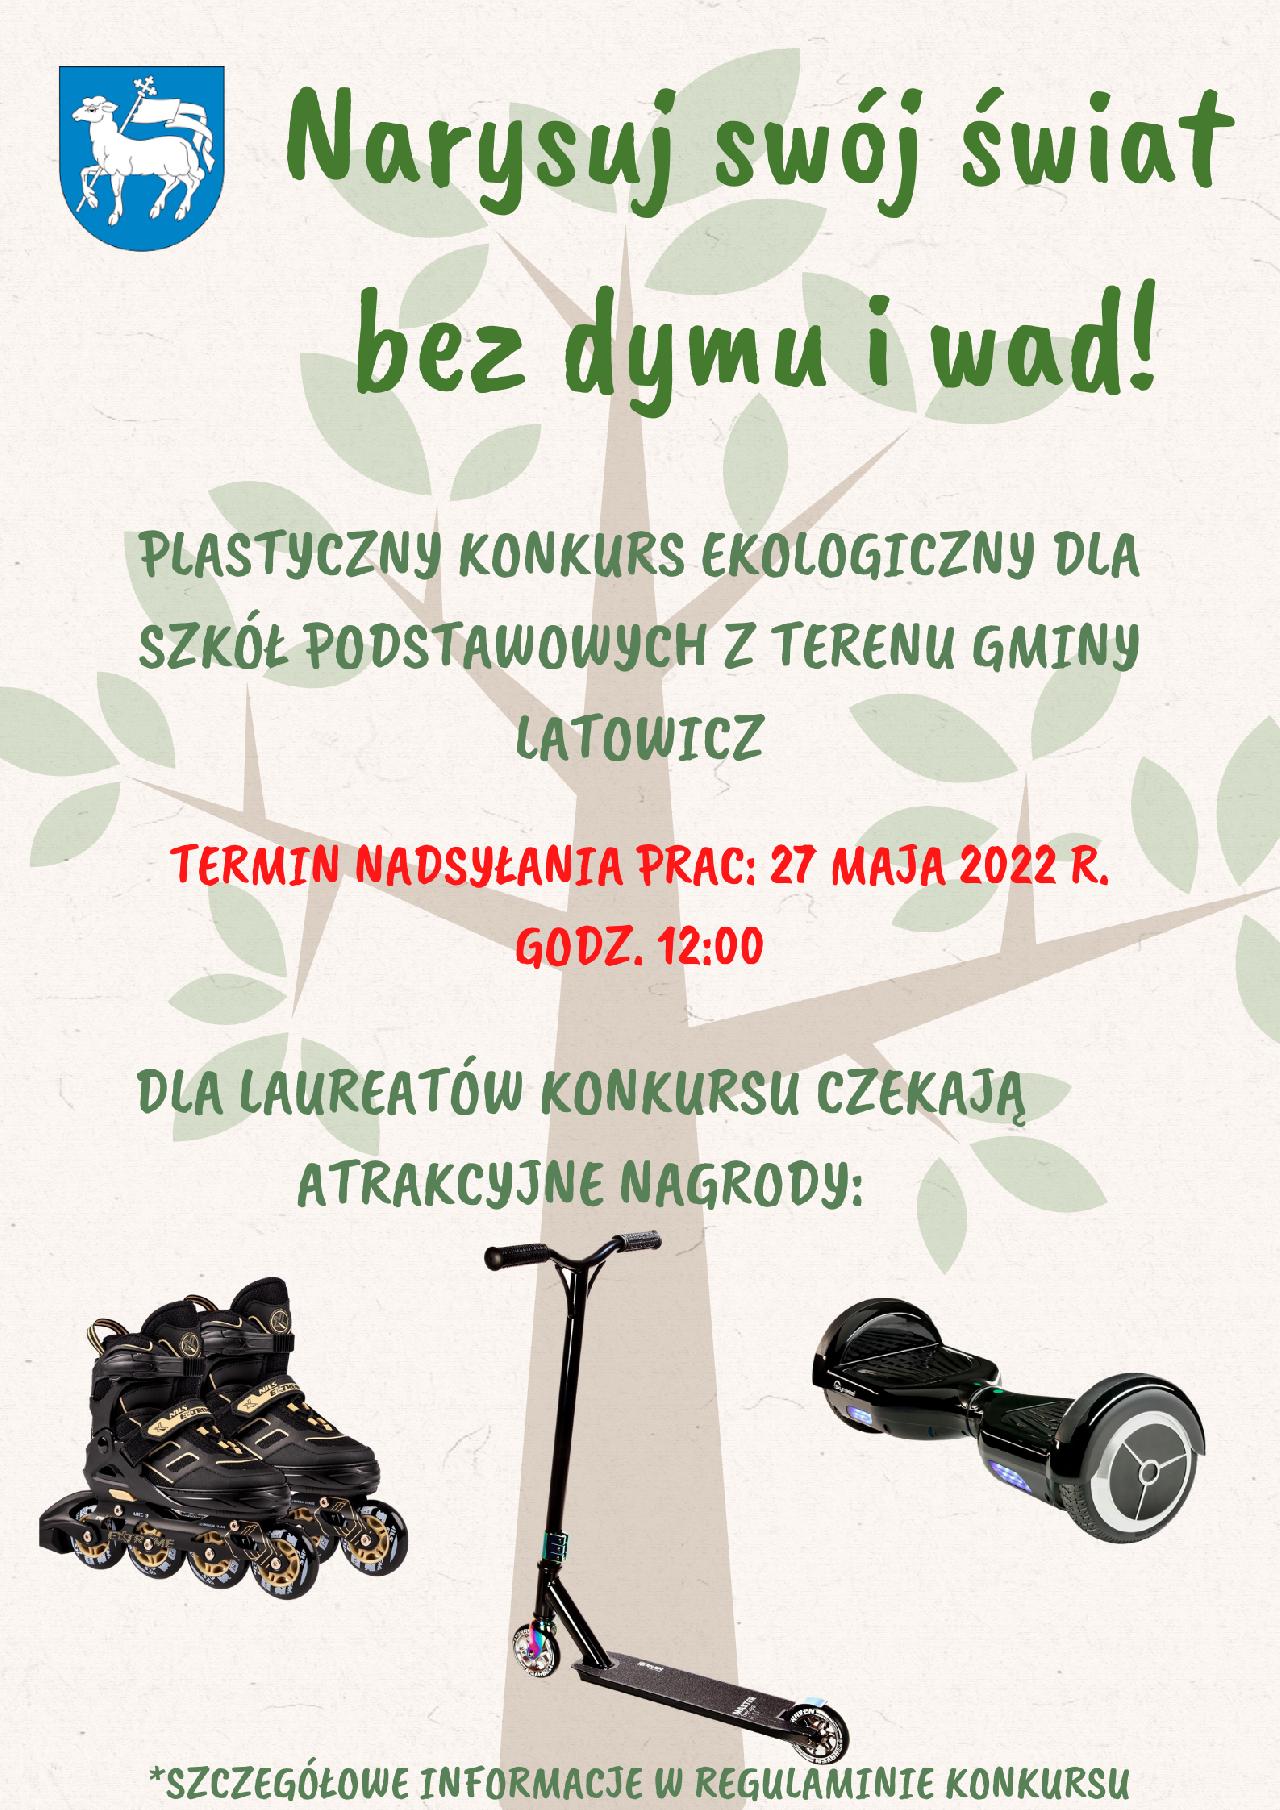 plakat konkursowy nt. ekologii